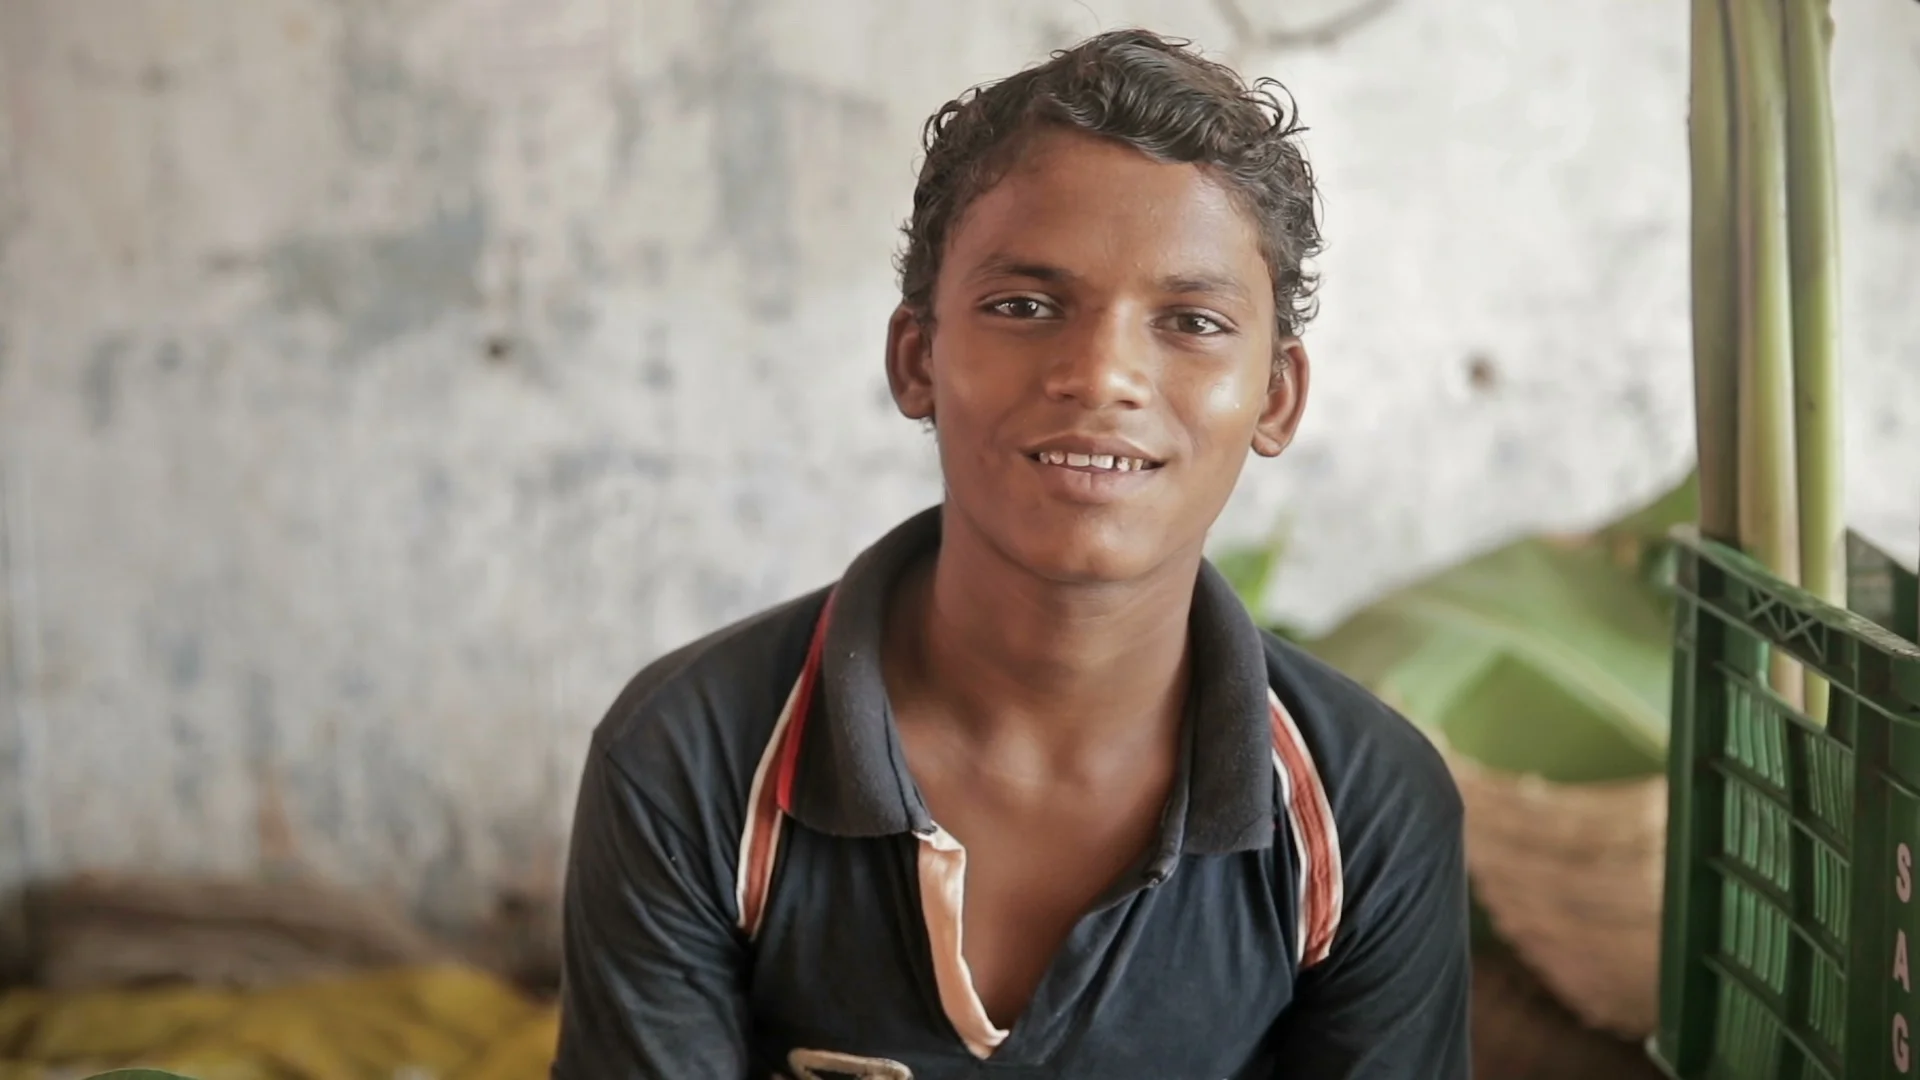 https://images.pond5.com/poor-indian-young-boy-selling-footage-085754102_prevstill.jpeg